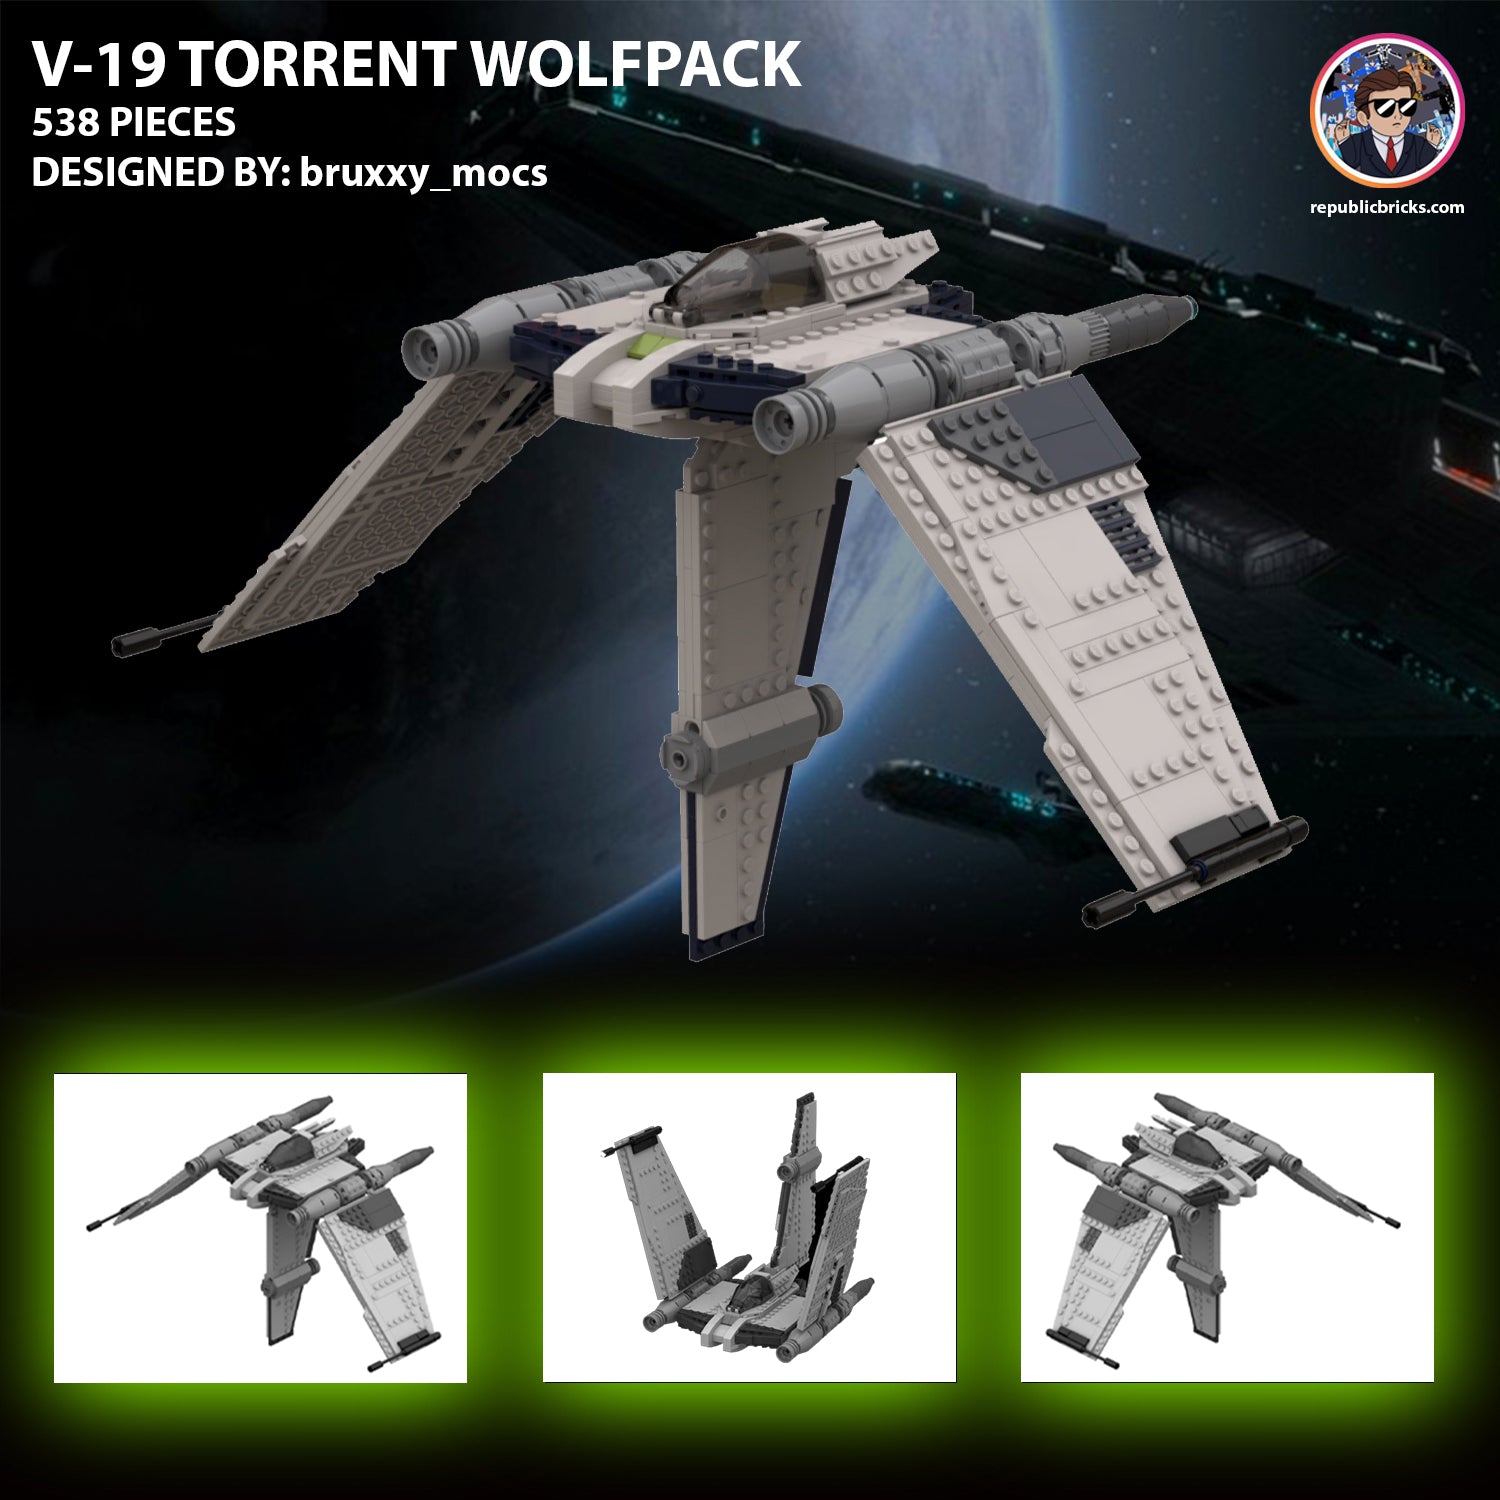 WOLFPACK V-19 TORRENT